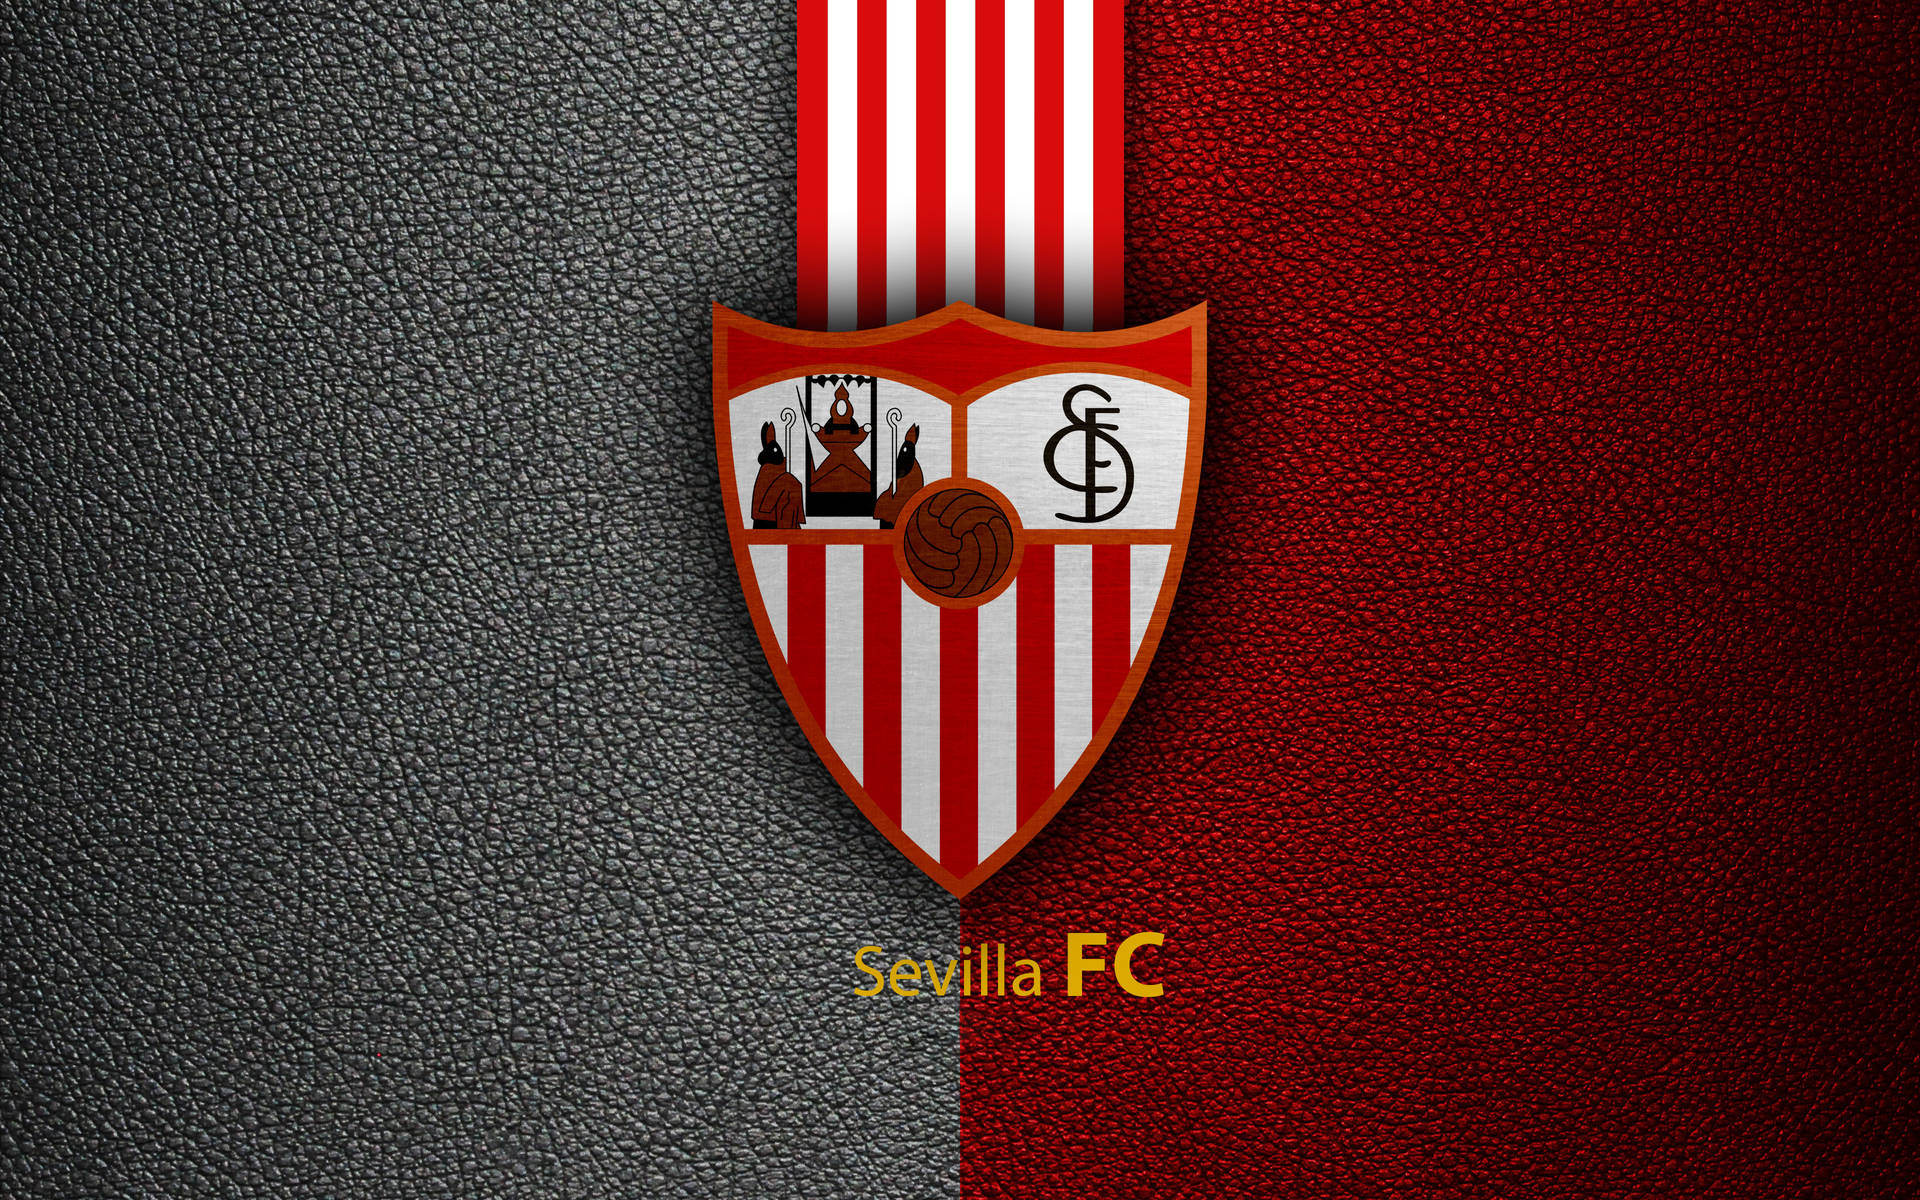 3D Sevilla FC Logo Tapet: Vis din støtte til Sevilla FC med dette dynamiske 3D-logotapet. Wallpaper